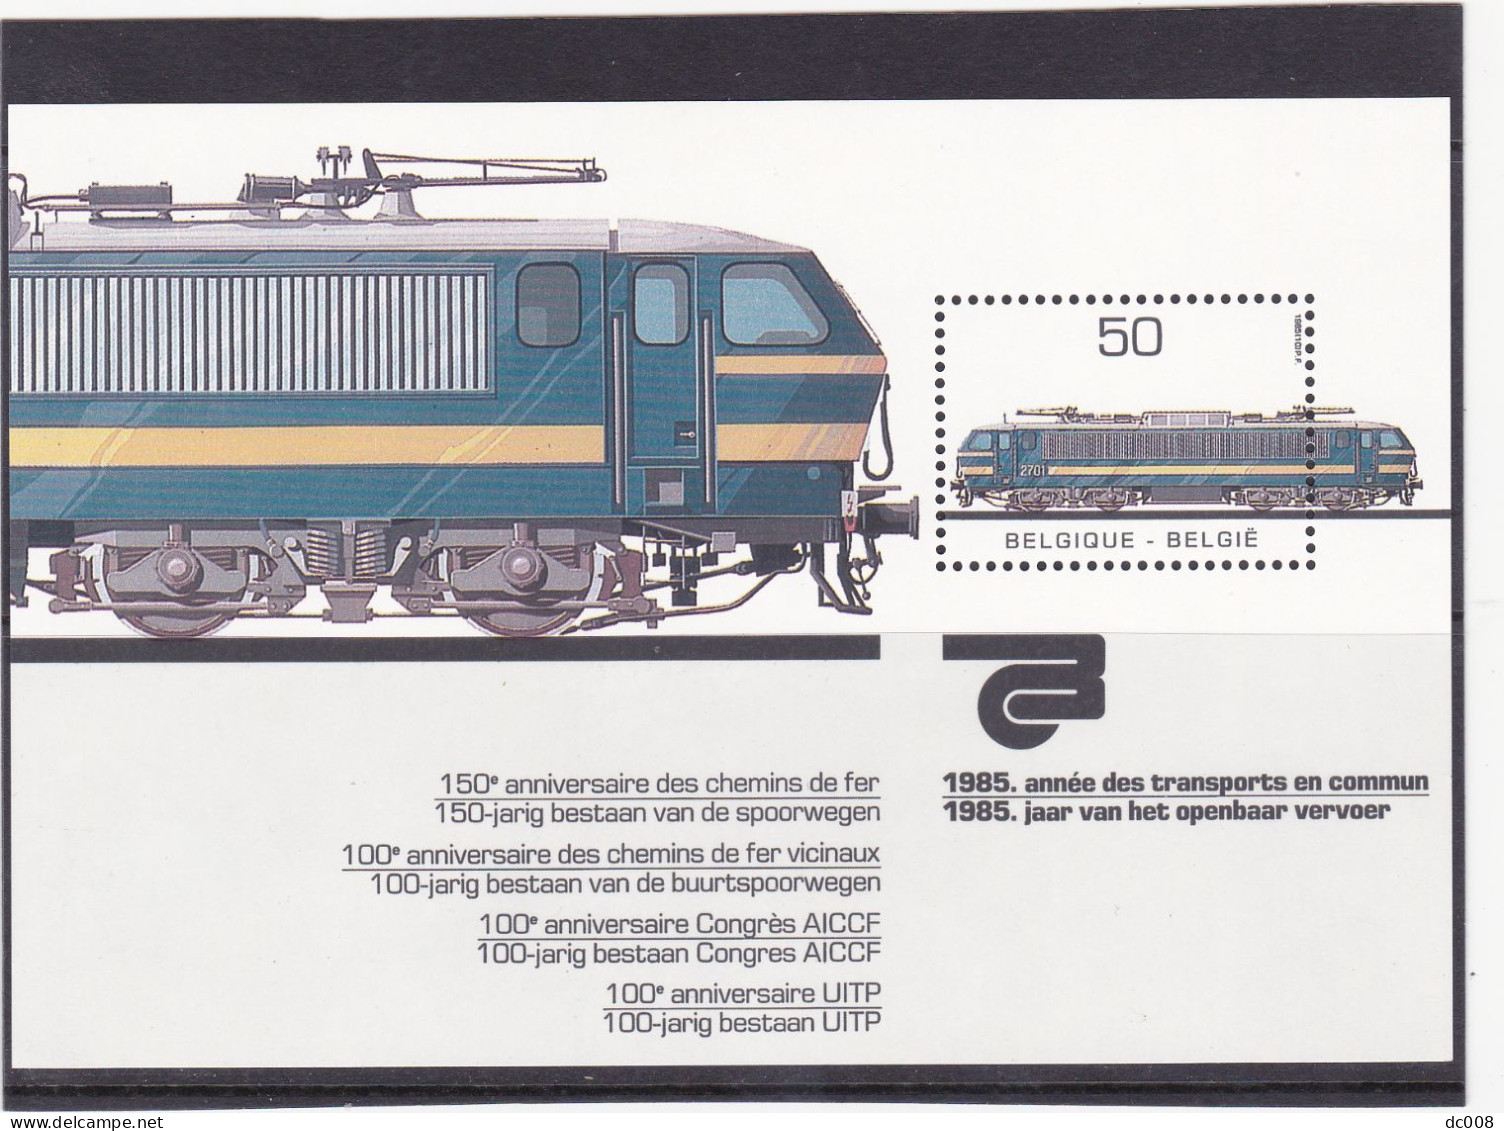 COB BL61 Openbaar Vervoer-Transports Publics-1985-MNH-postfris-neuf-10 Stuks/pieces - 1961-2001